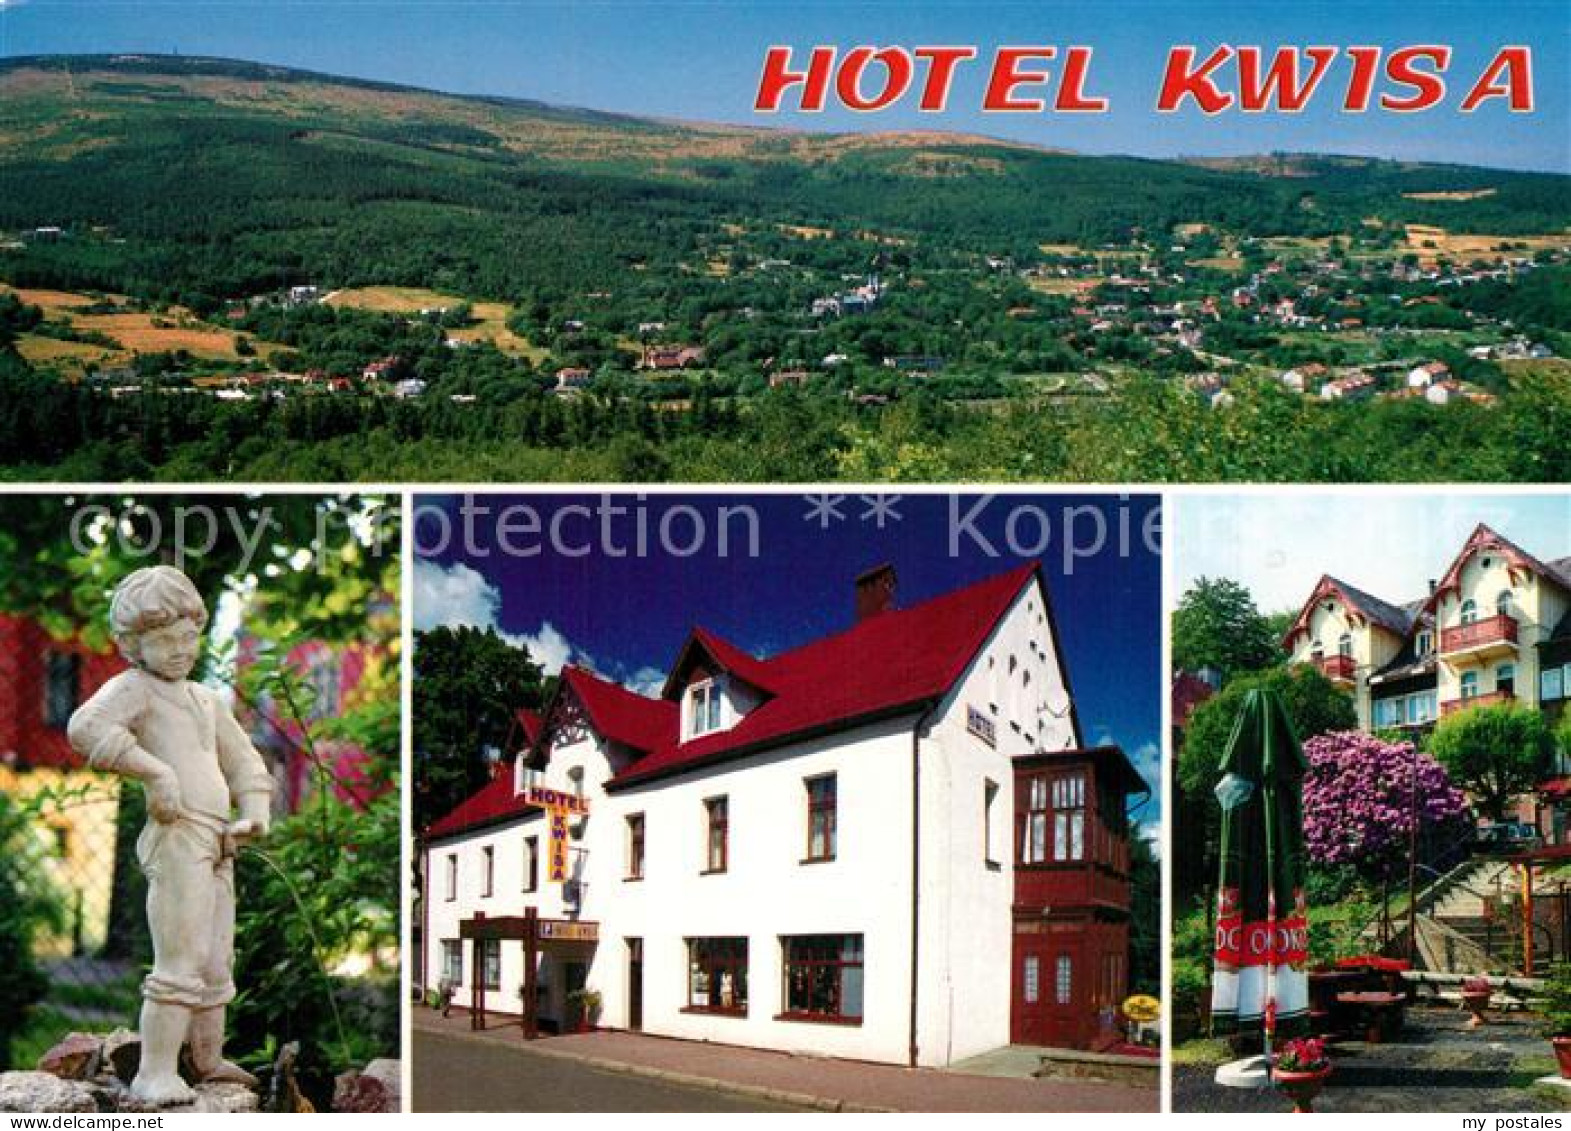 73280538 Swieradow Zdroj Bad Flinsberg Panorama Hotel Kwisa Brunnenfigur Garten  - Poland